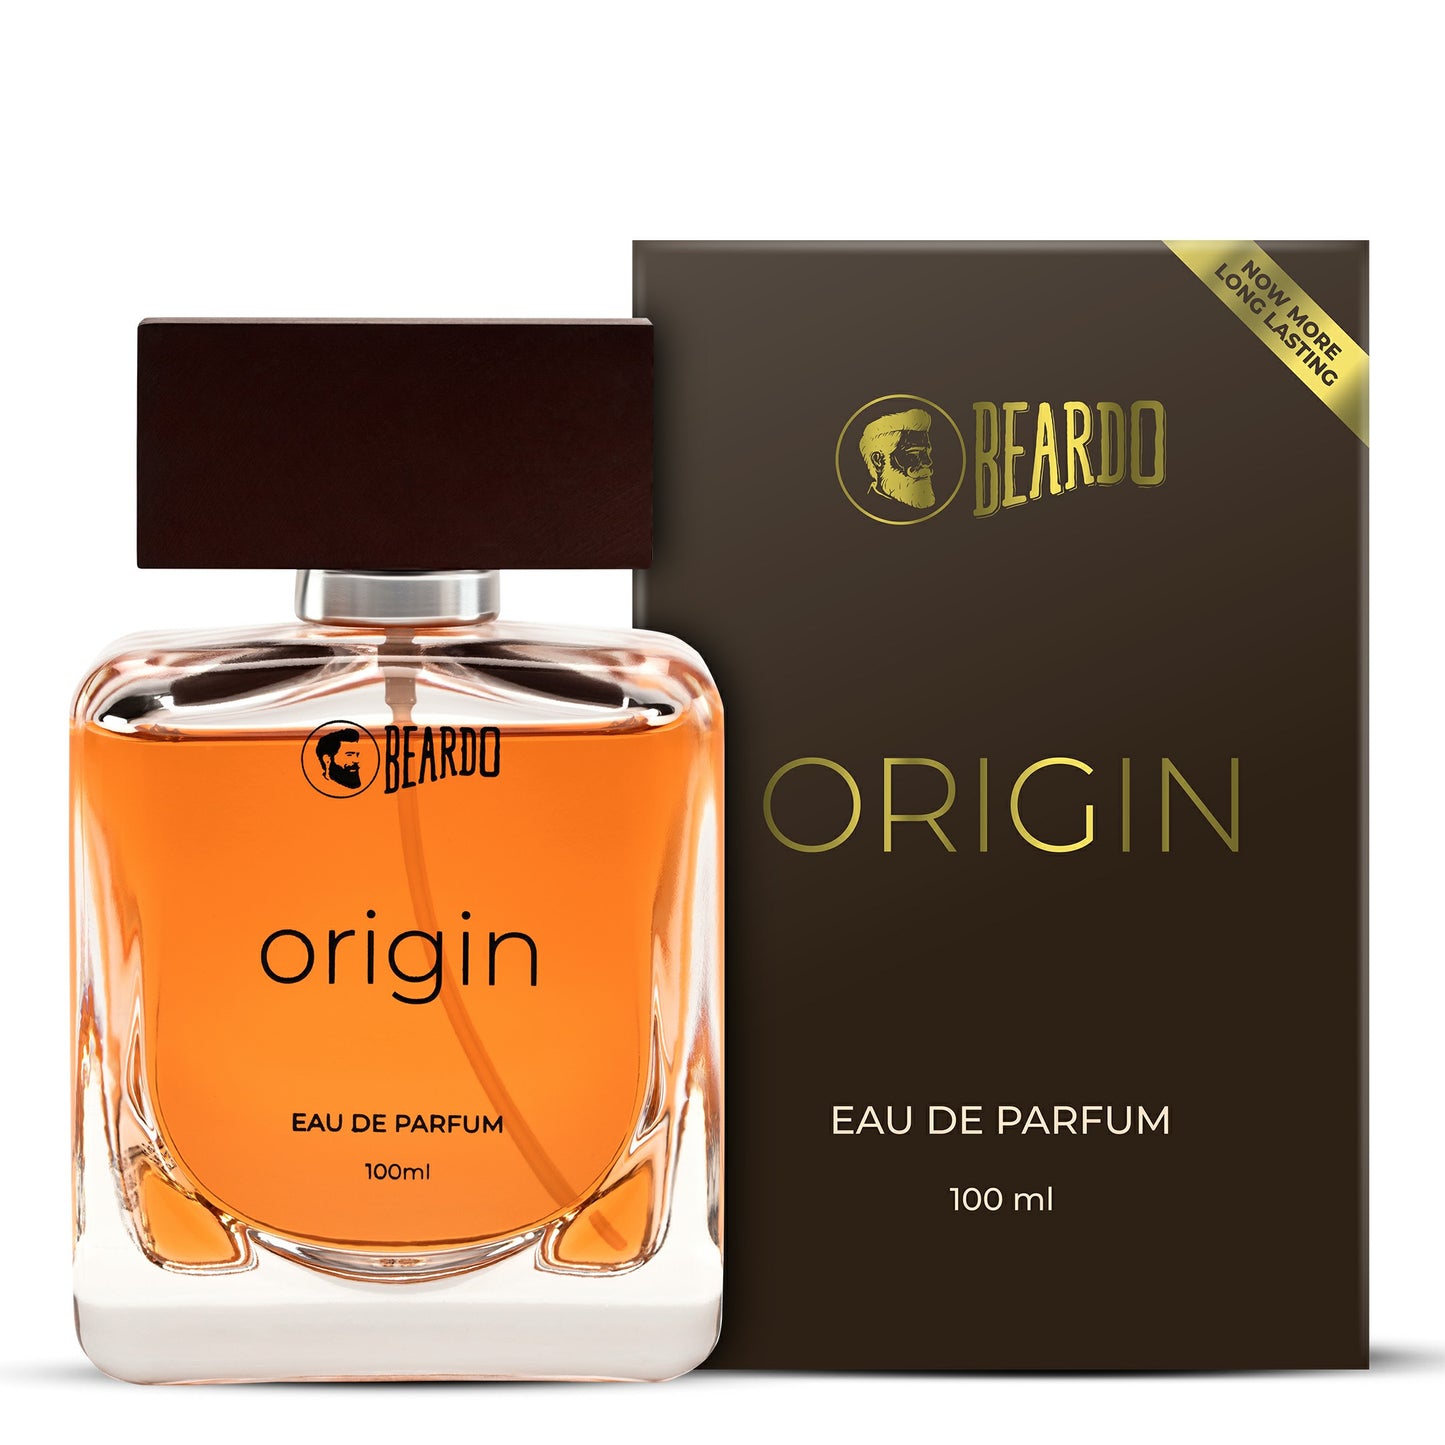 Beardo origin perfume, classic perfume